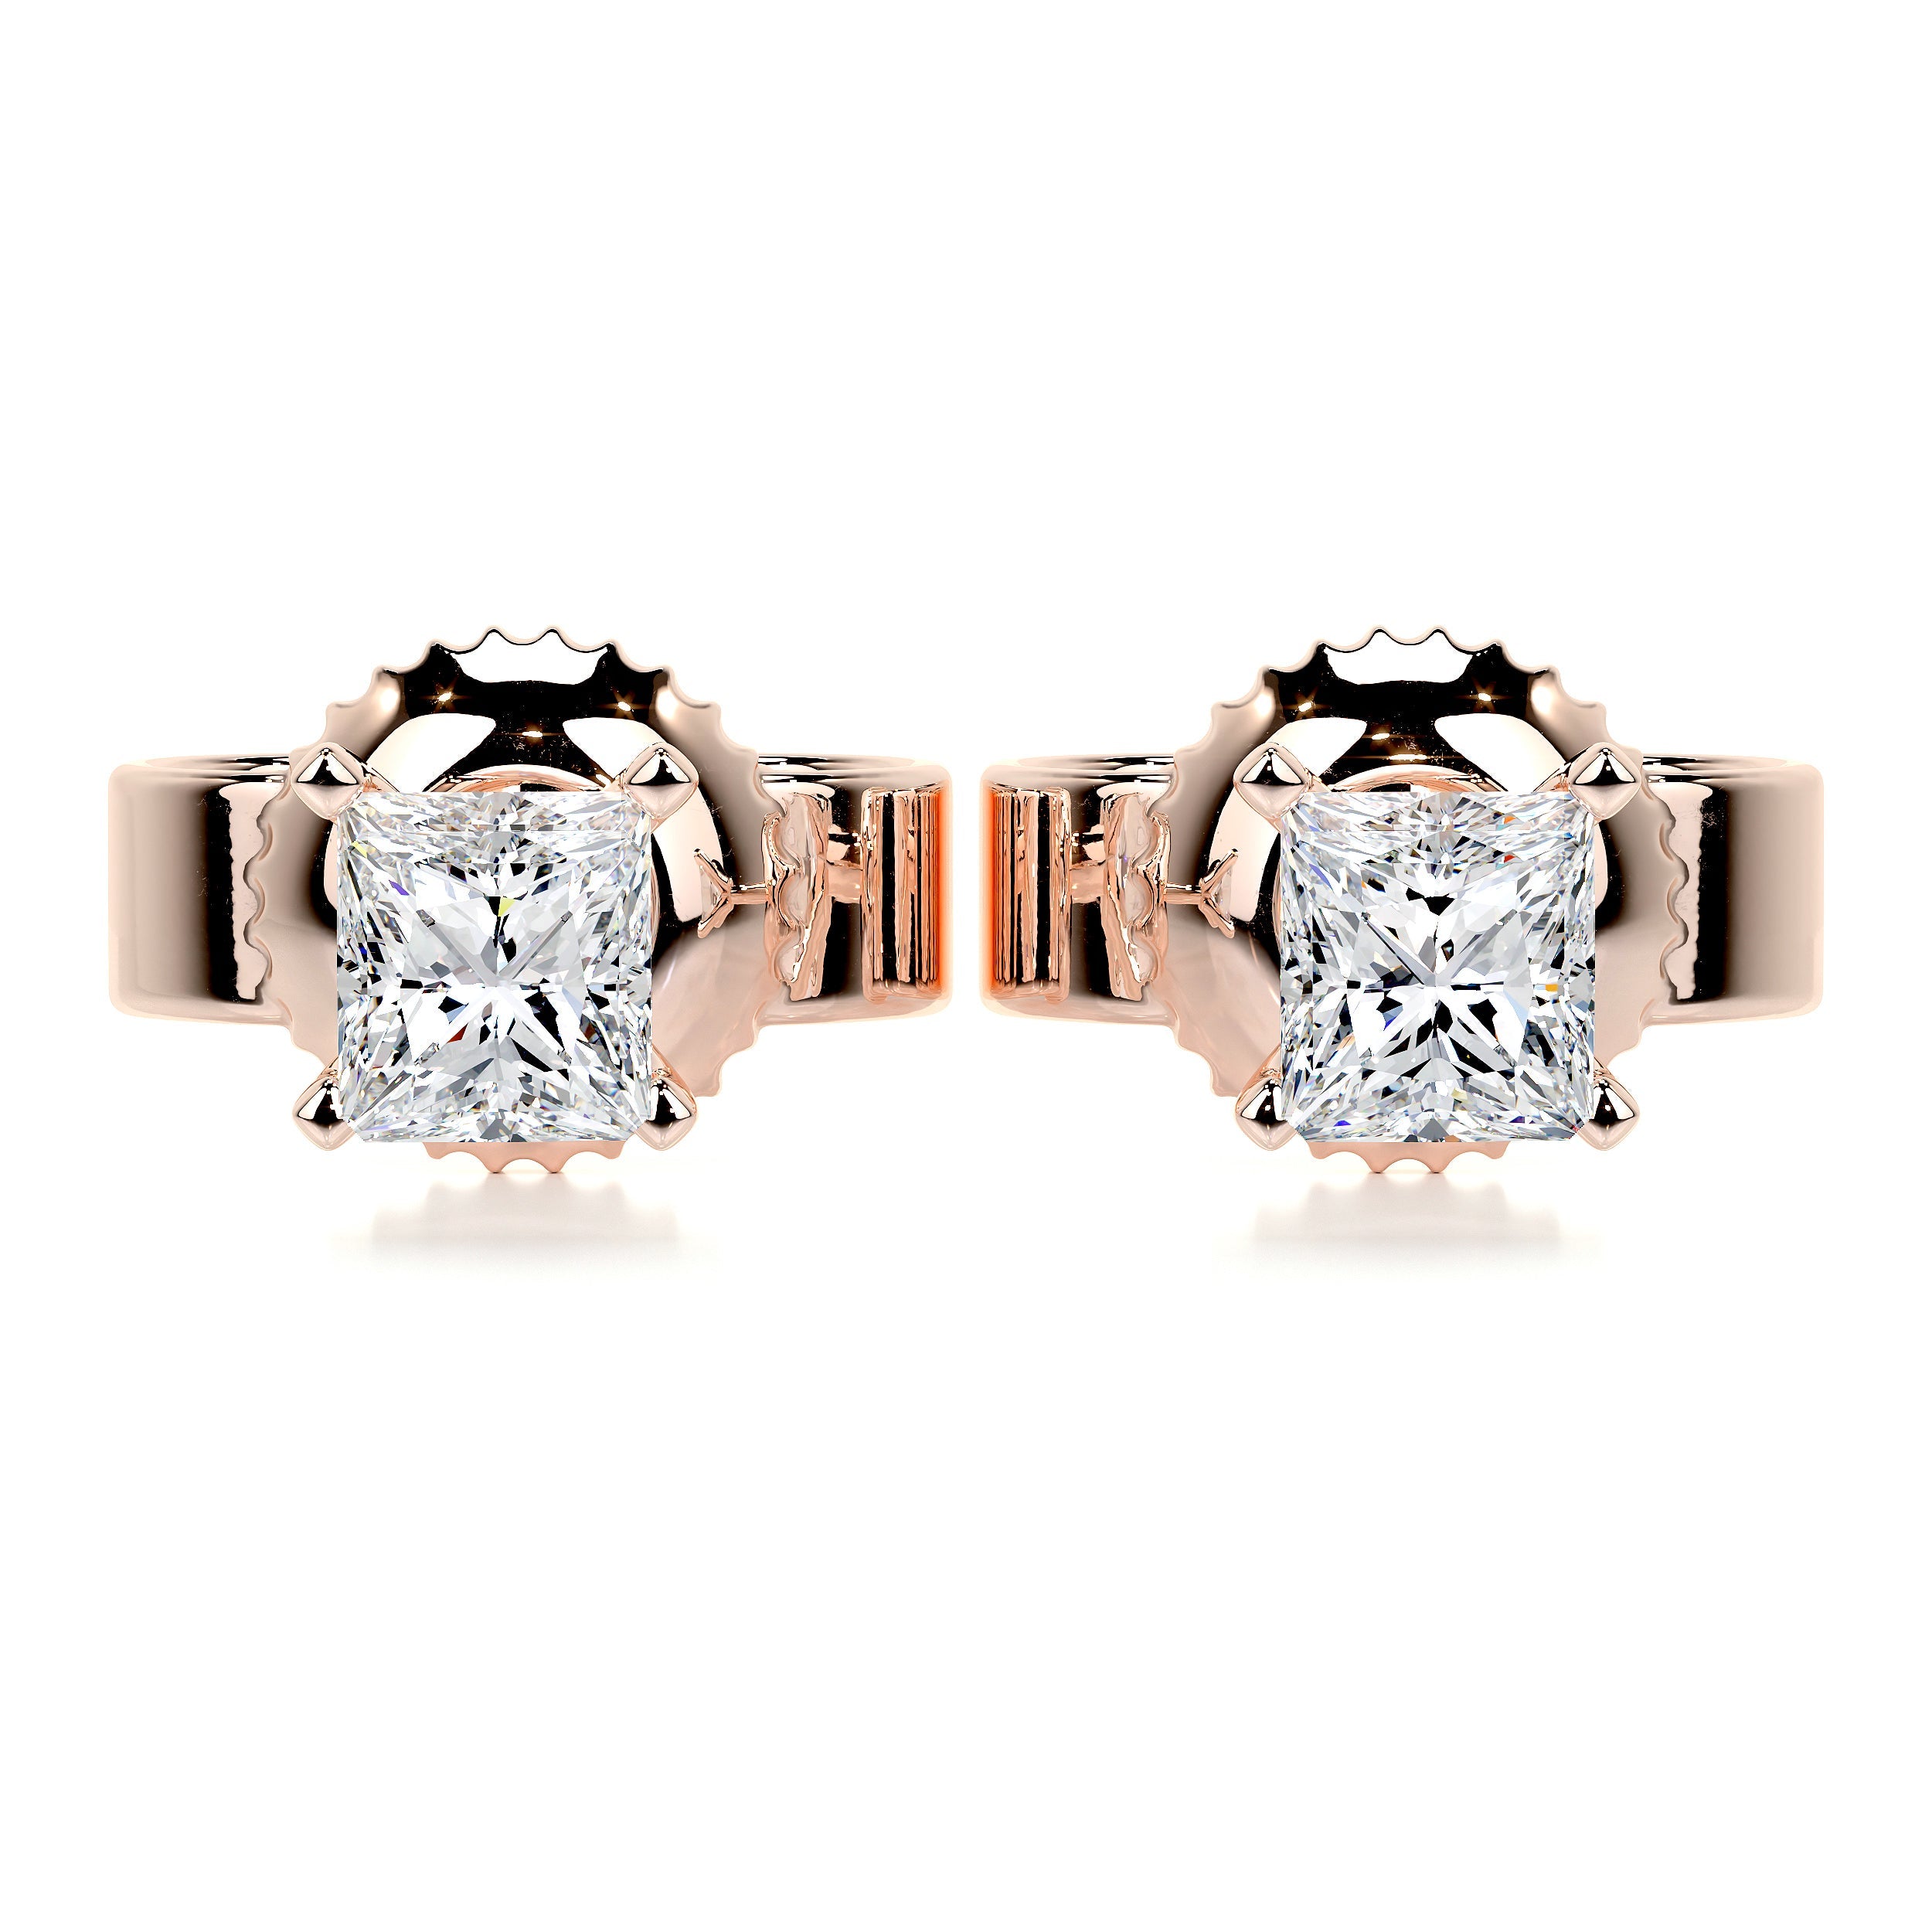 Jamie Diamond Earrings   (1 Carat) -14K Rose Gold